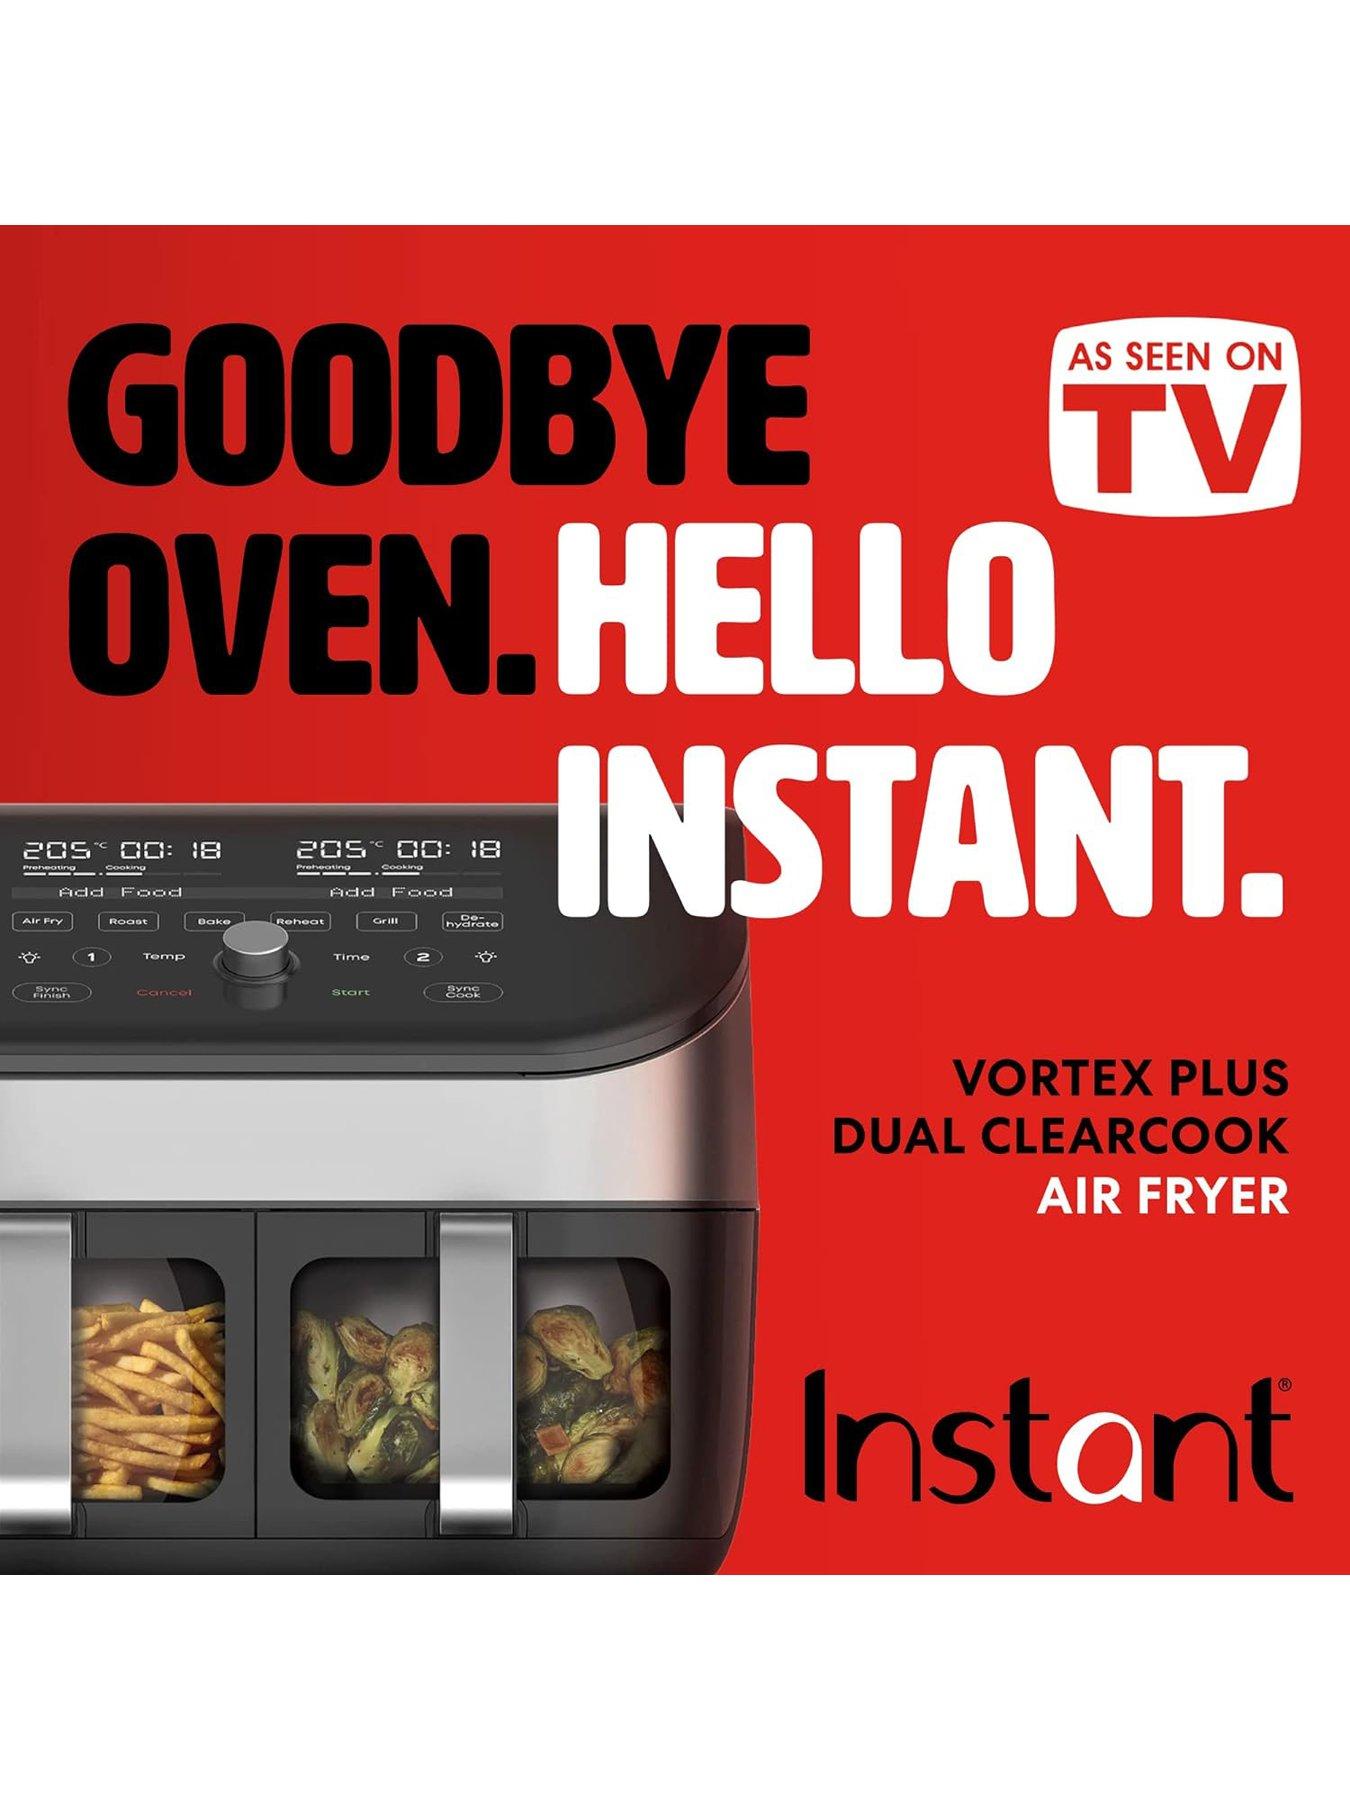 Instant Vortex Plus Dual ClearCook Air Fryer 8 Liters, Small appliances